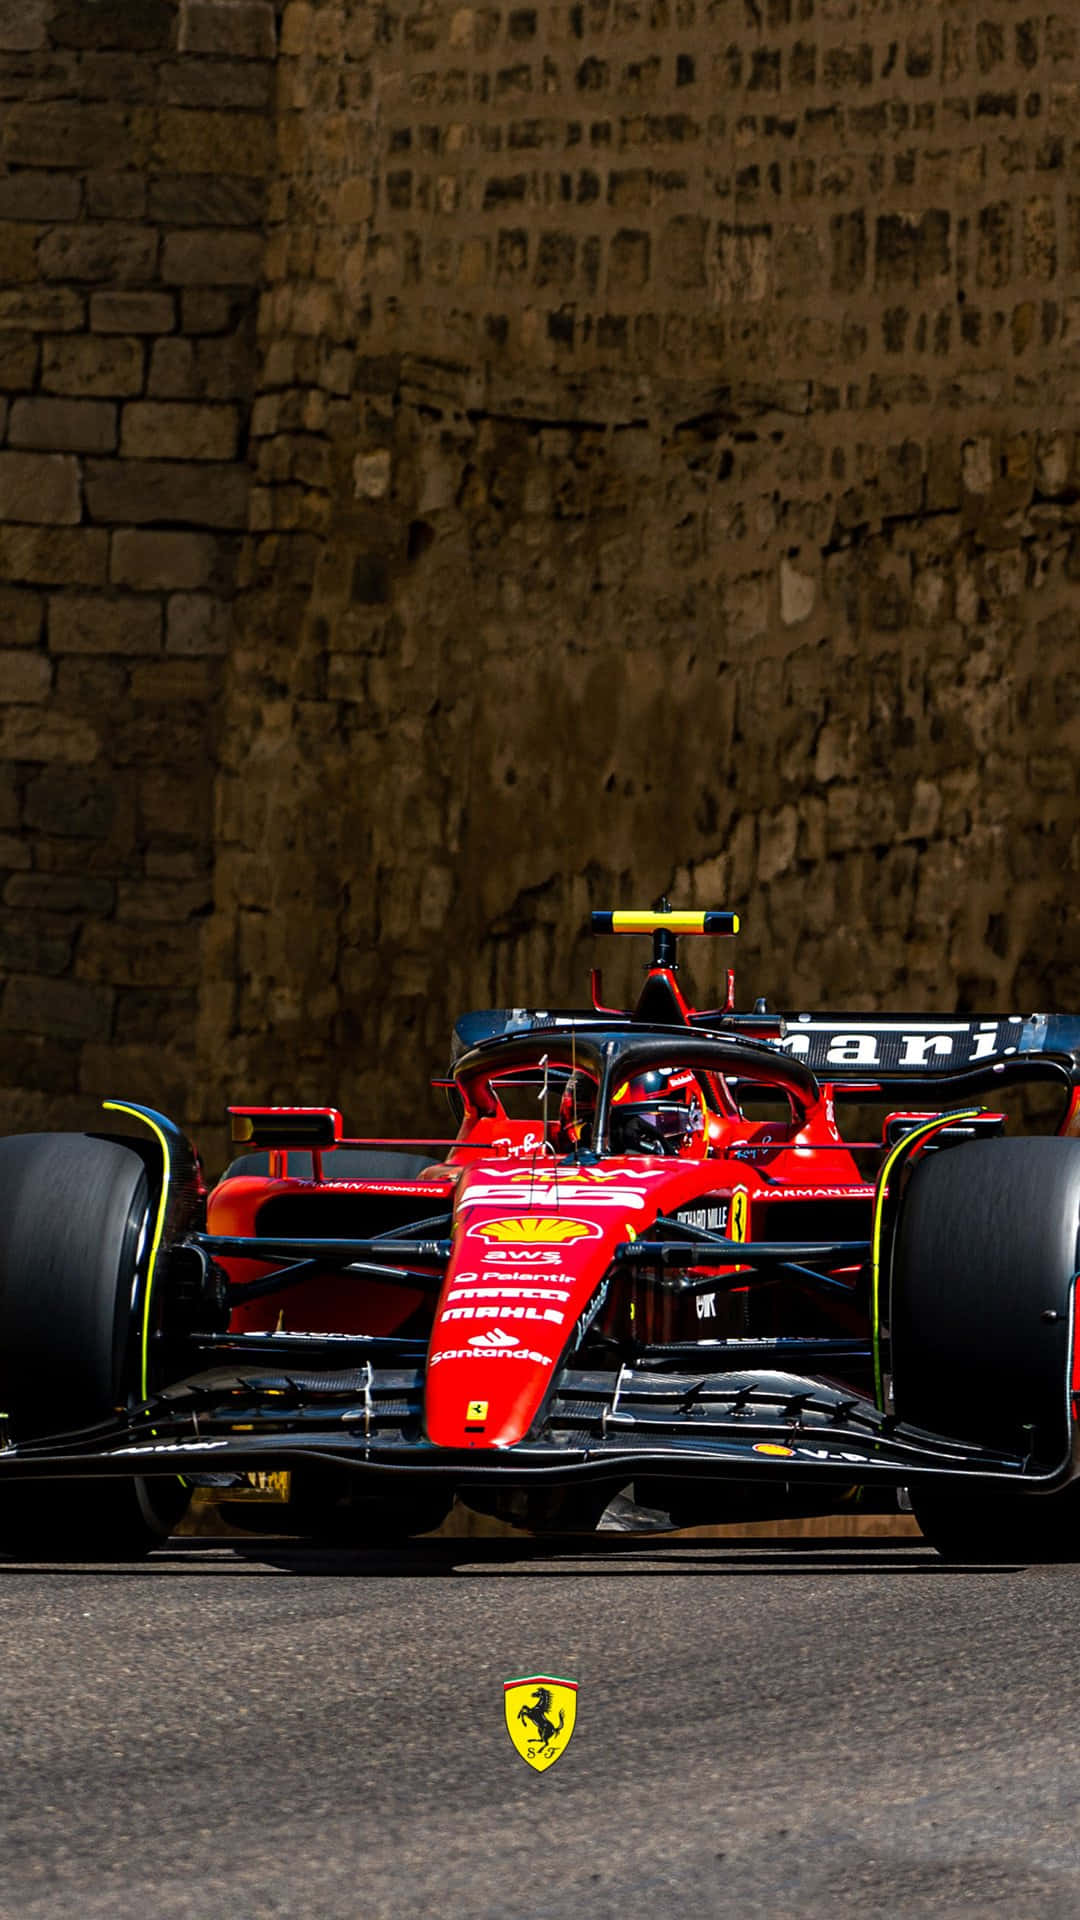 Ferrari F1 Racing Car Stone Wall Backdrop Wallpaper